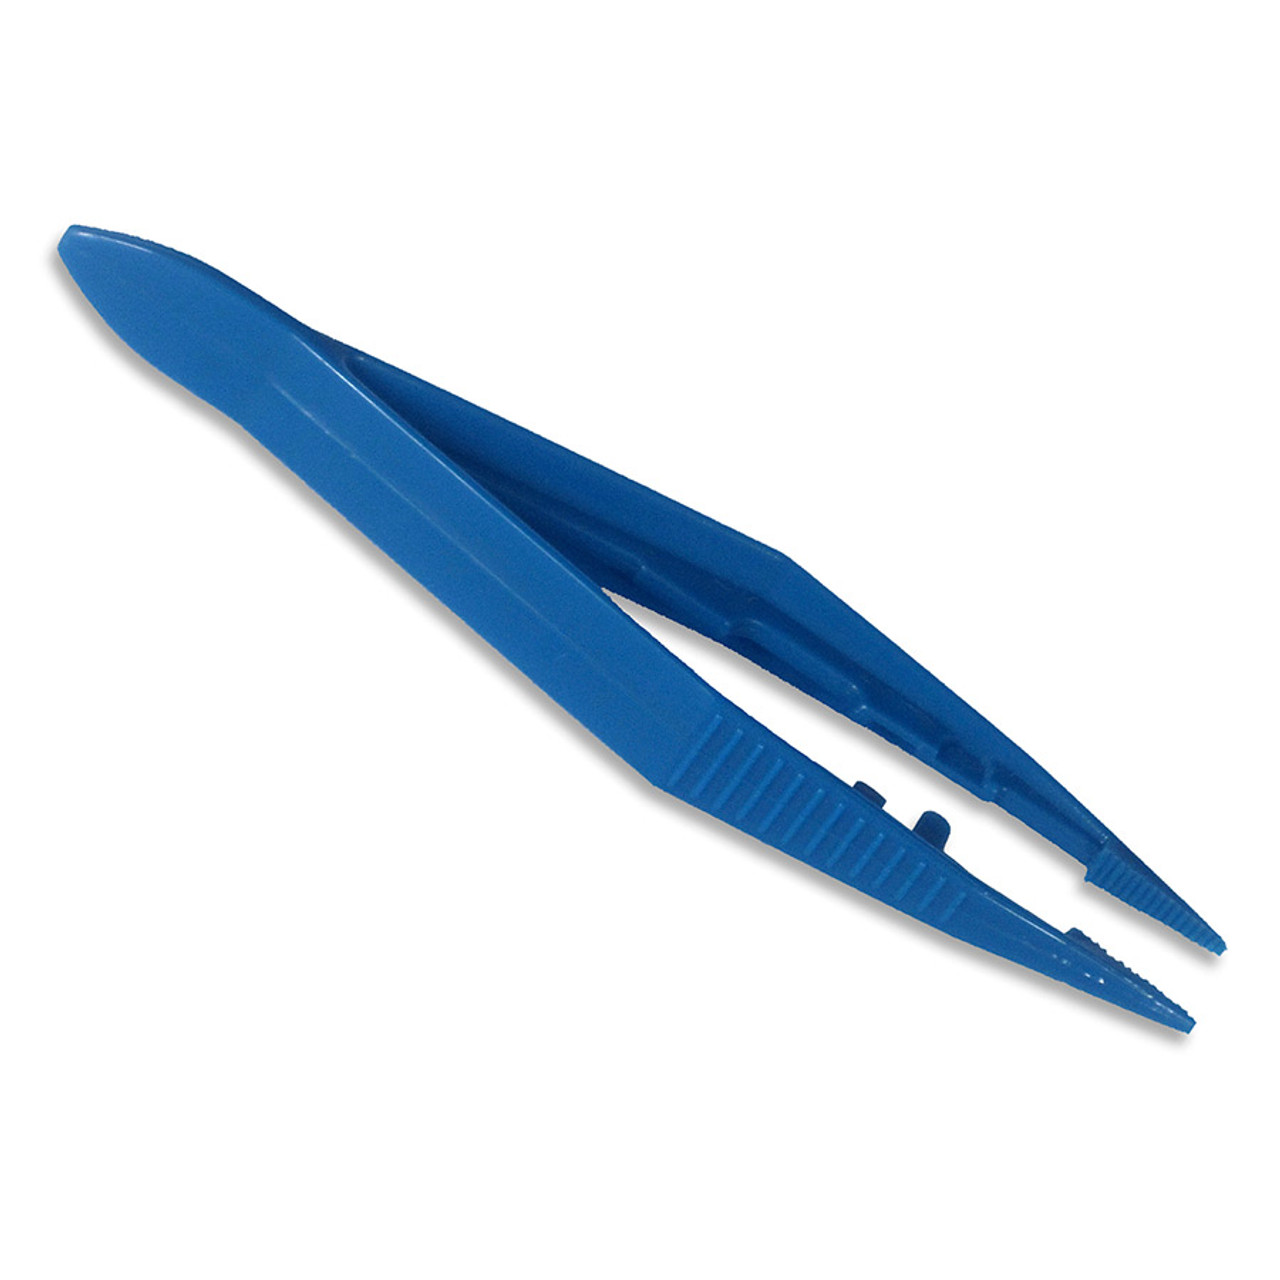 Pack of 10 - Disposable Plastic Tweezer Forceps - Blue